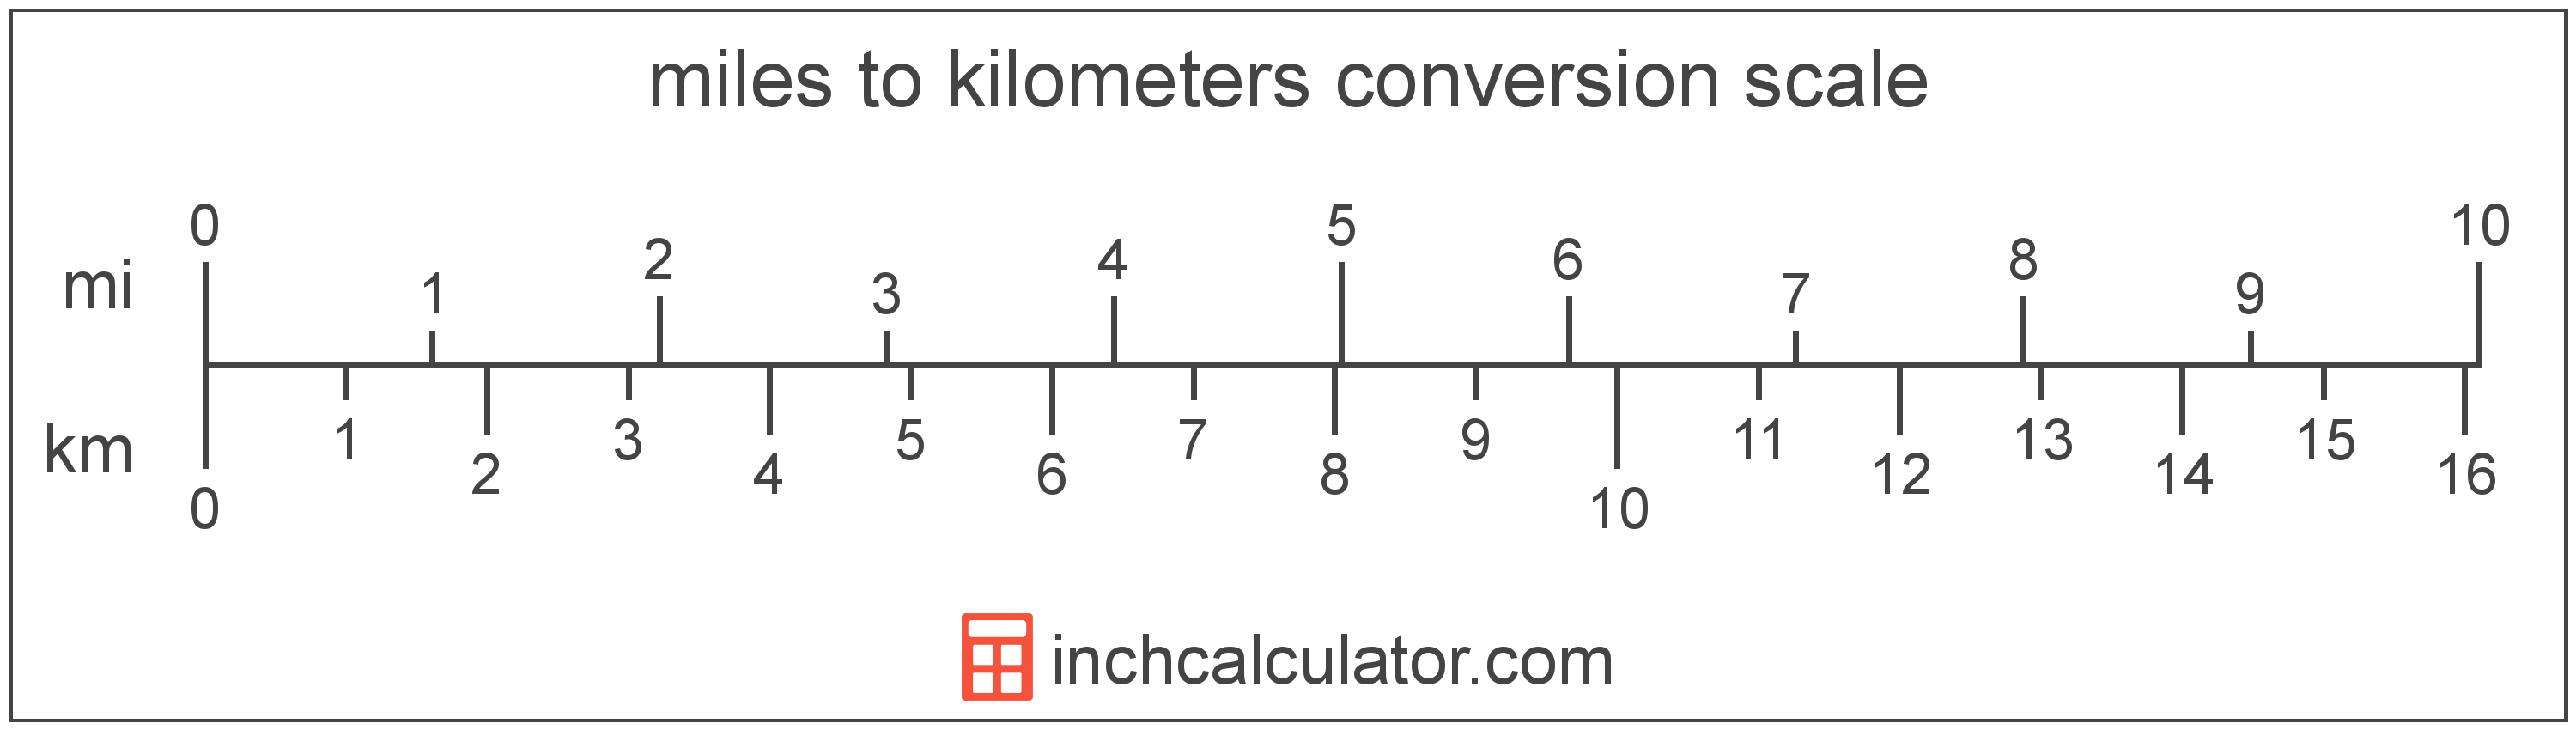 miles-to-km-converter-miles-to-kilometers-inch-calculator